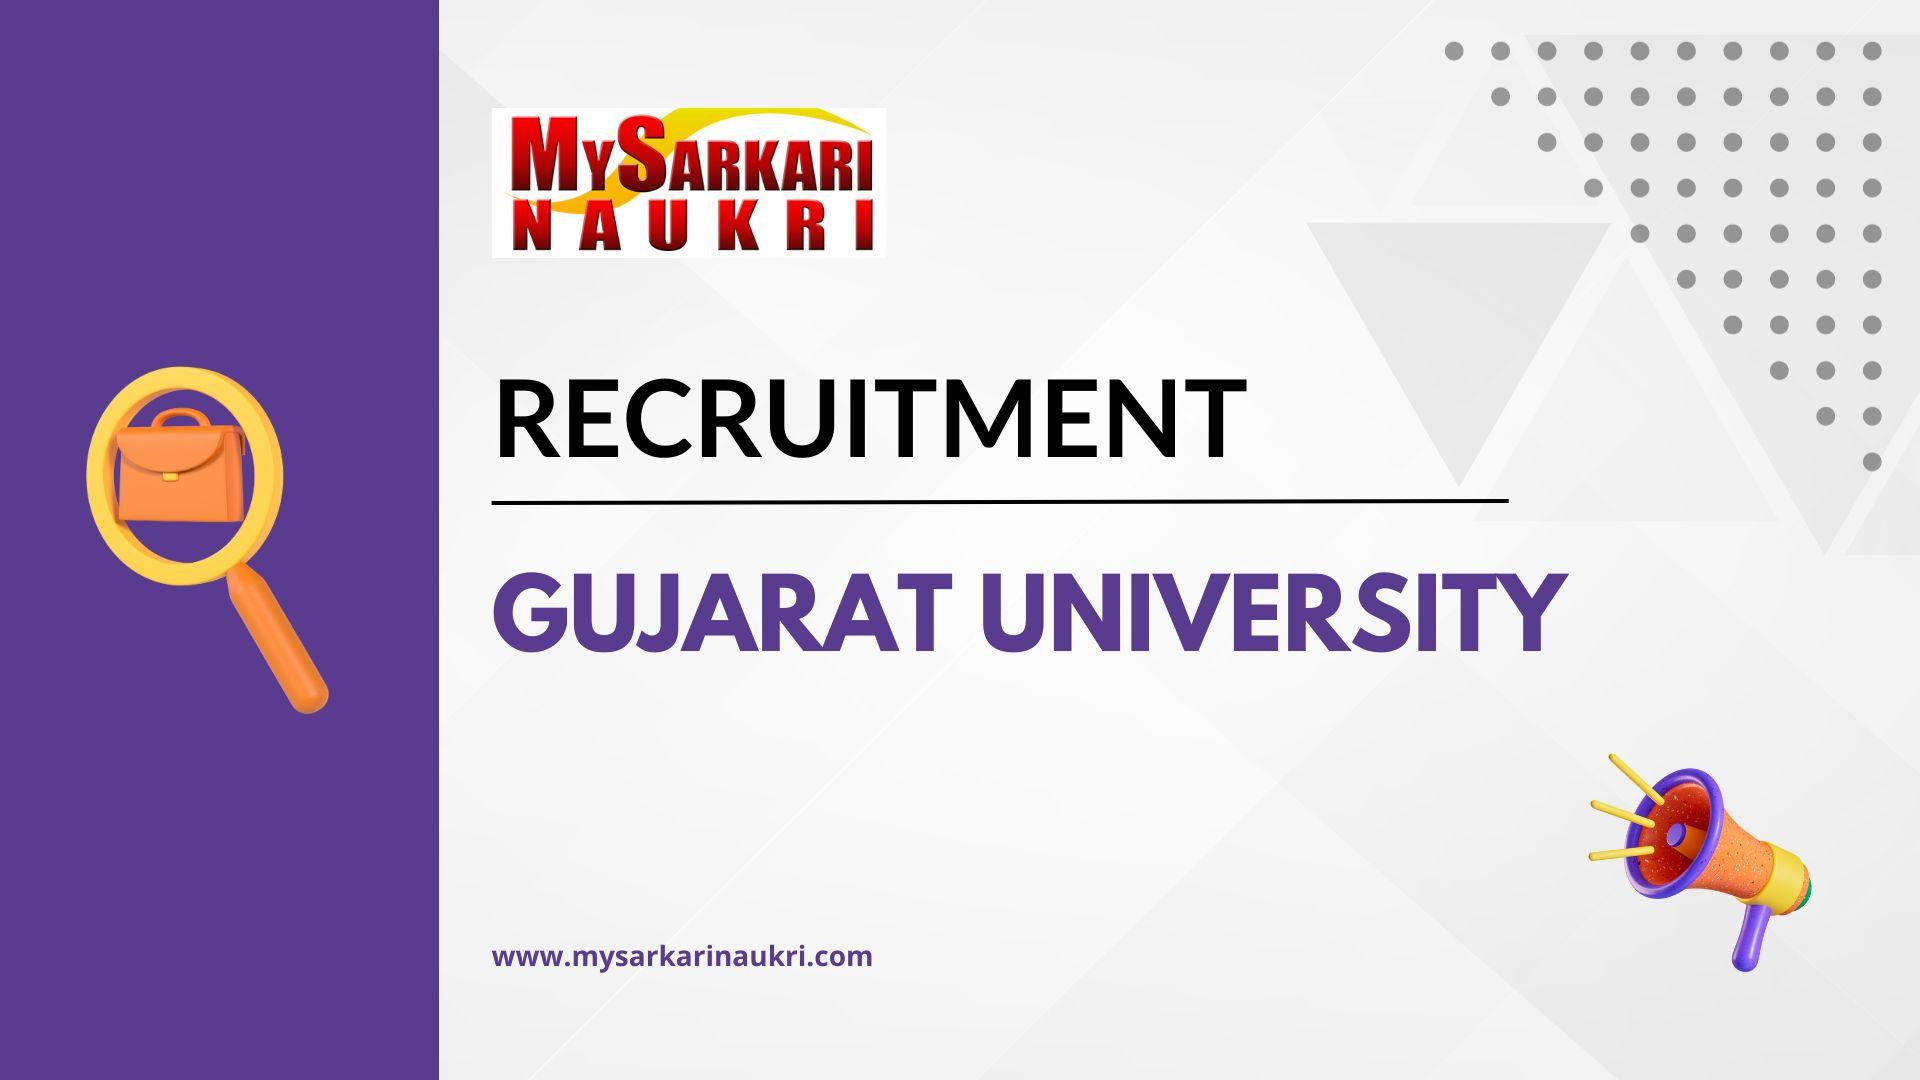 Gujarat University - Crunchbase School Profile & Alumni